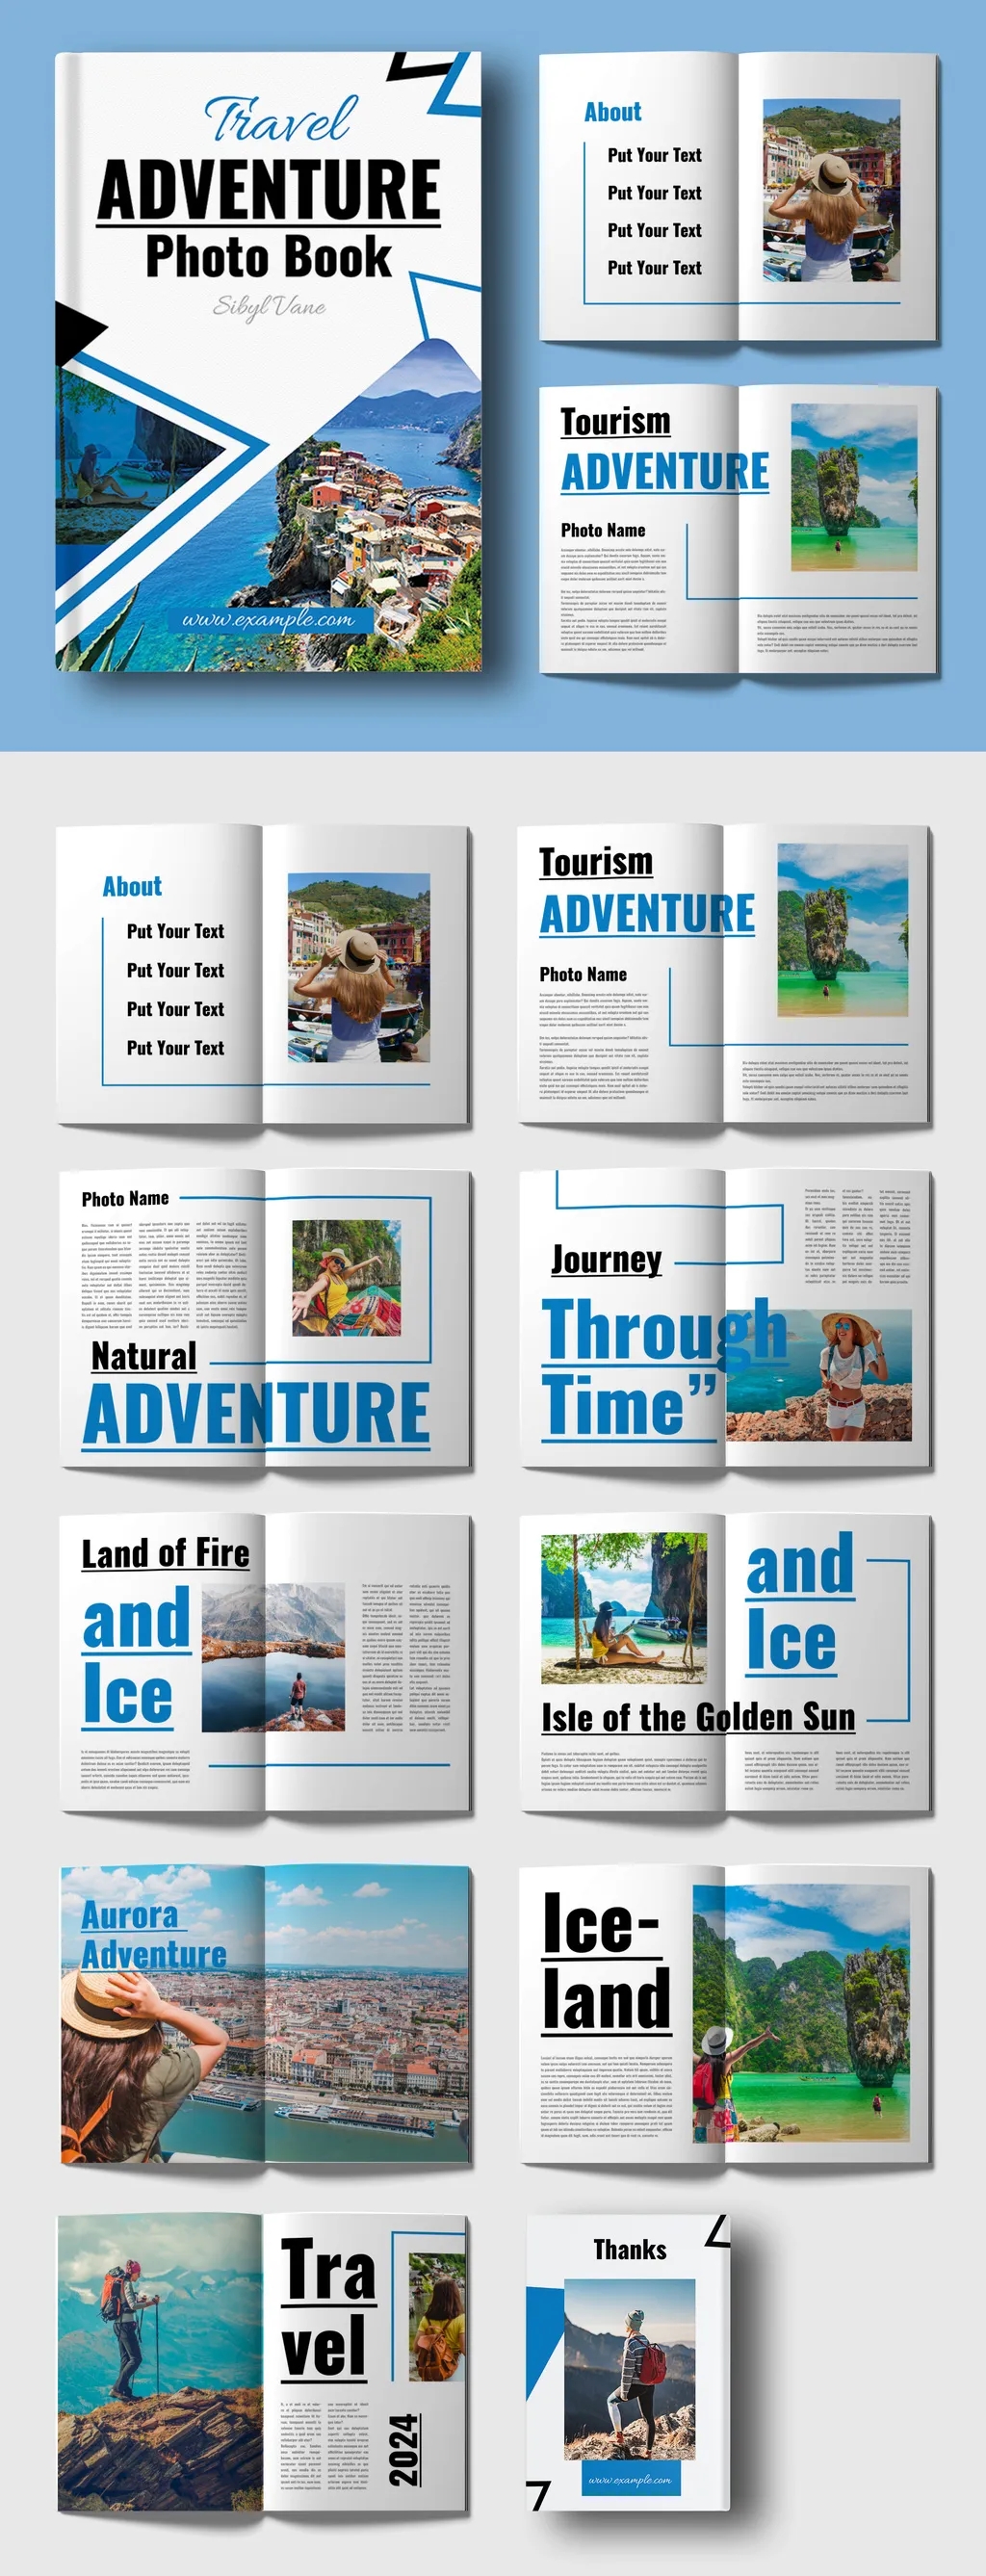 Adobestock - Adventure Photo Book Magazine Layout 722994547